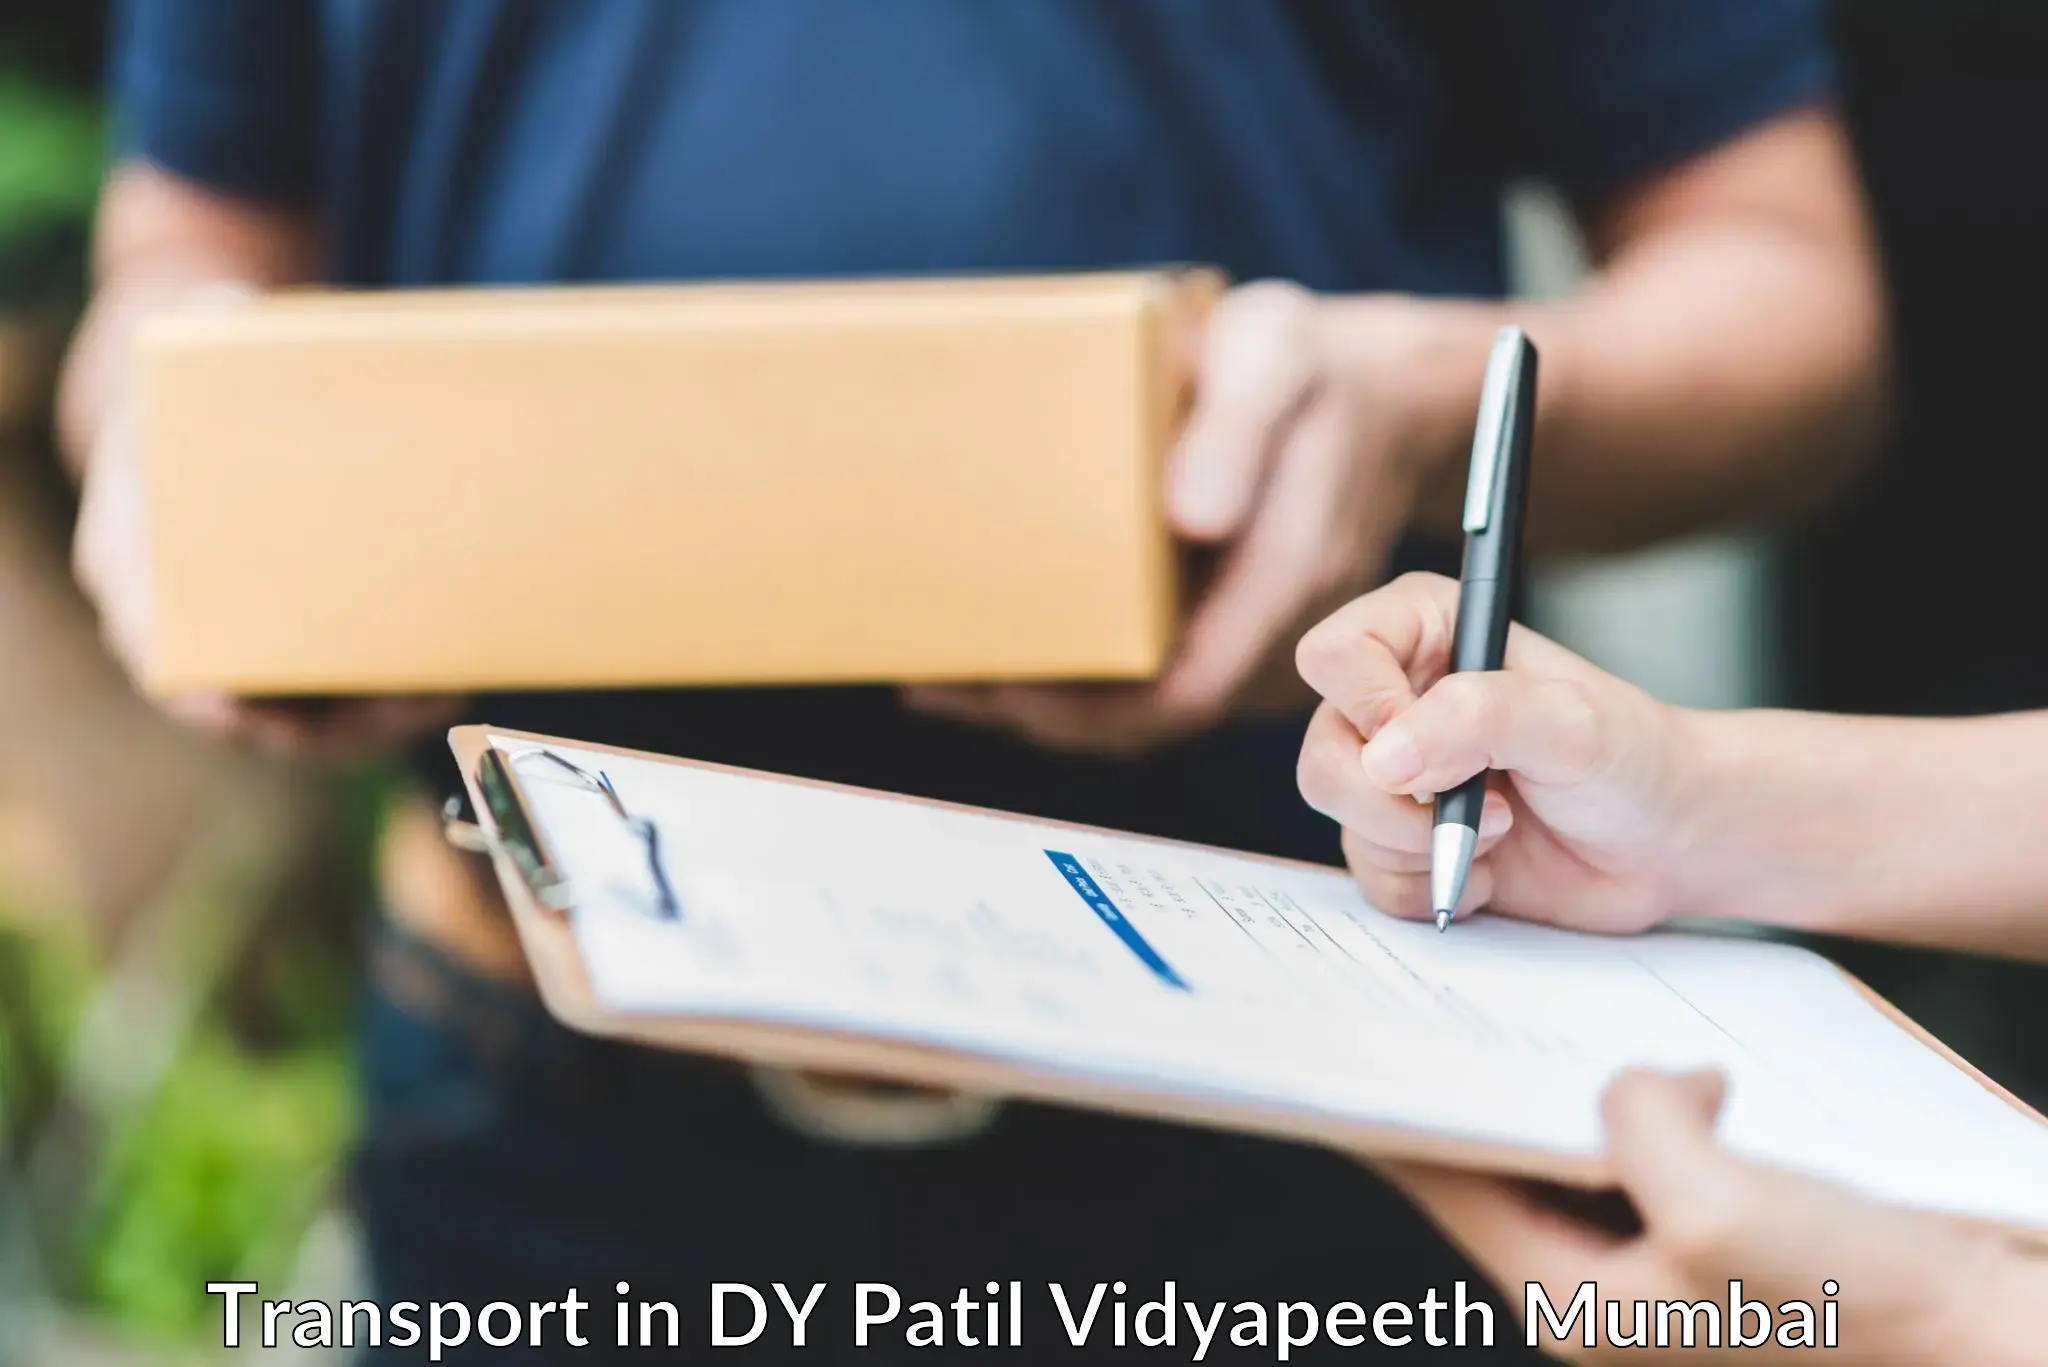 Interstate goods transport in DY Patil Vidyapeeth Mumbai